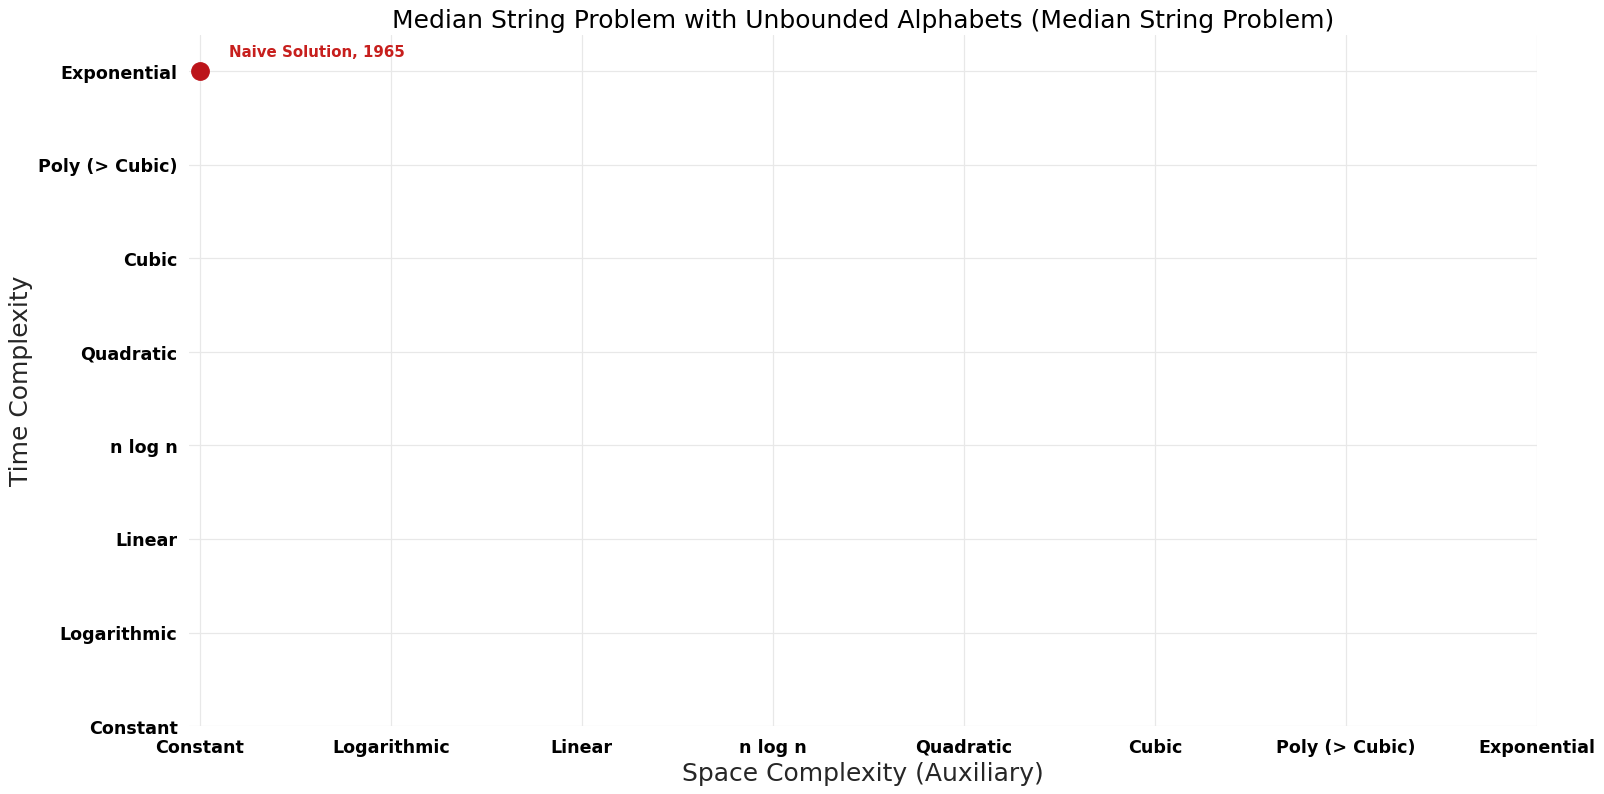 Median String Problem - Median String Problem with Unbounded Alphabets - Pareto Frontier.png